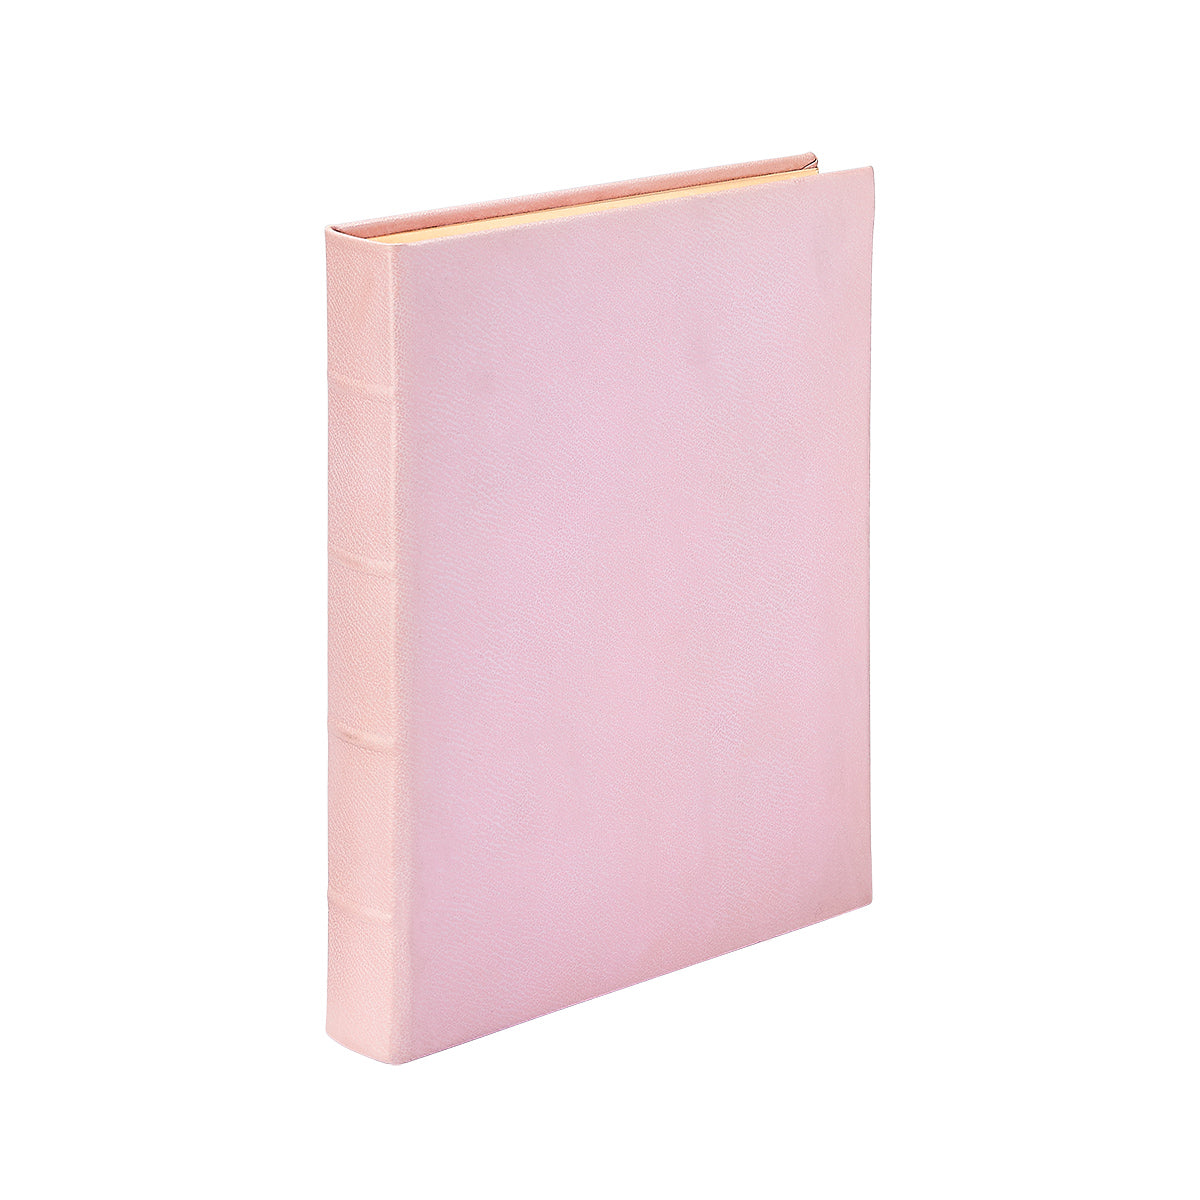 Graphic Image Junior Bound Album Light Pink Goatskin Leather